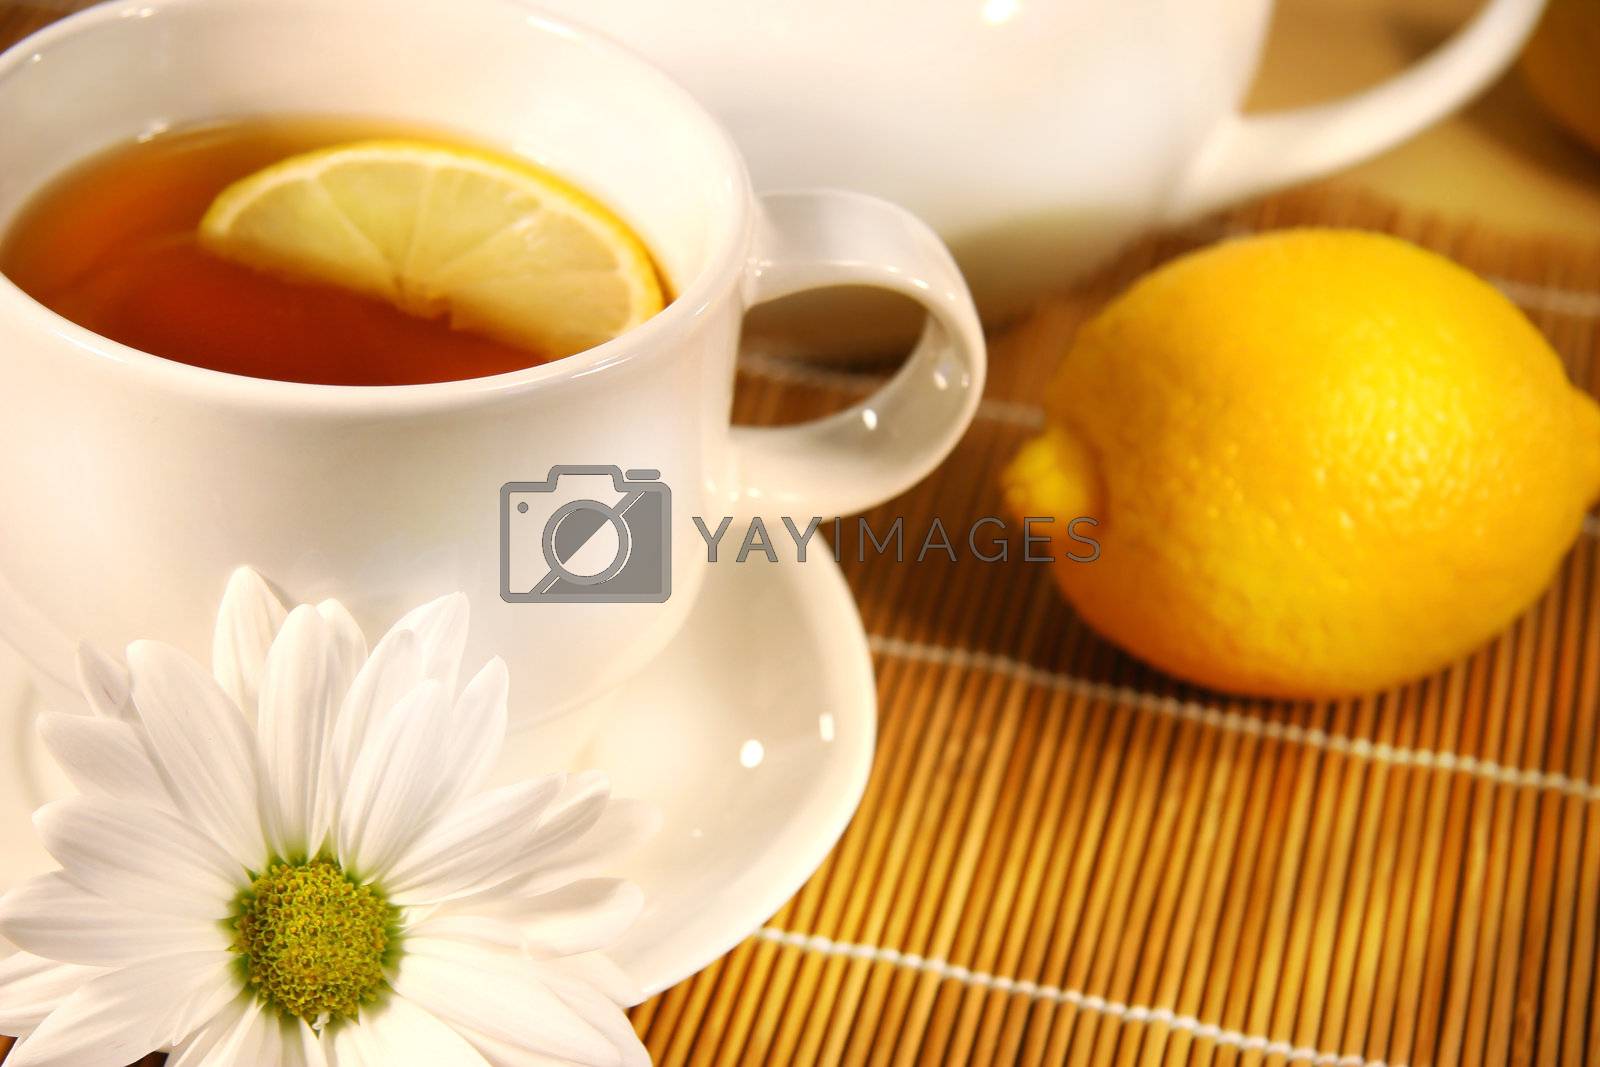 Royalty free image of Tea and lemon slice by Sandralise